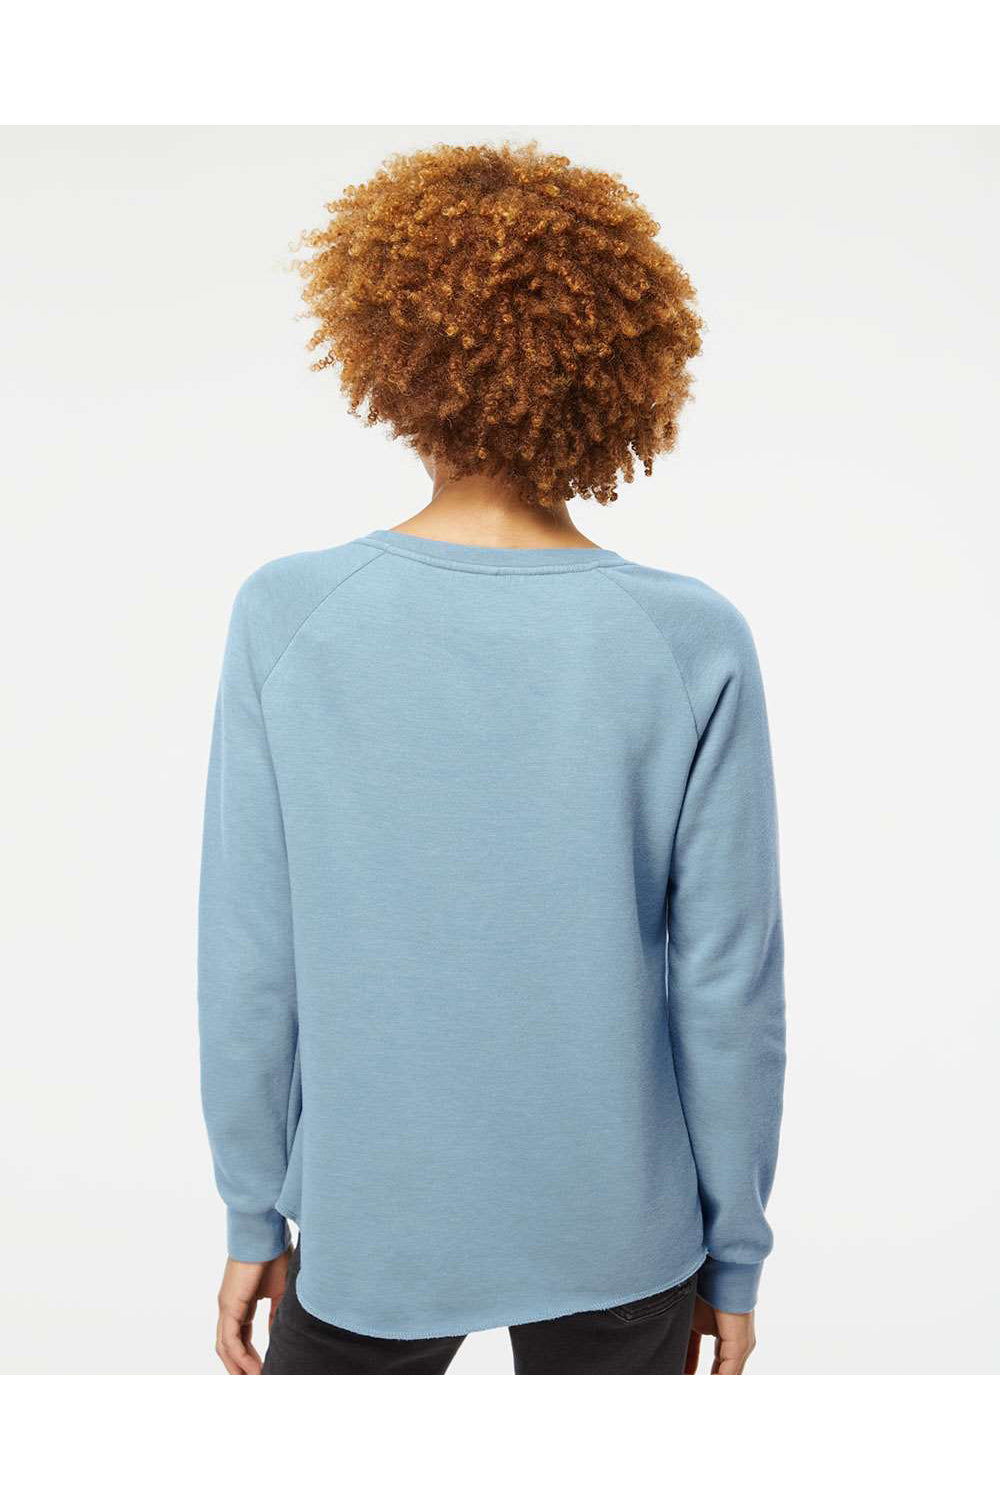 Independent Trading Co. PRM2000 Womens California Wave Wash Crewneck Sweatshirt Misty Blue Model Back